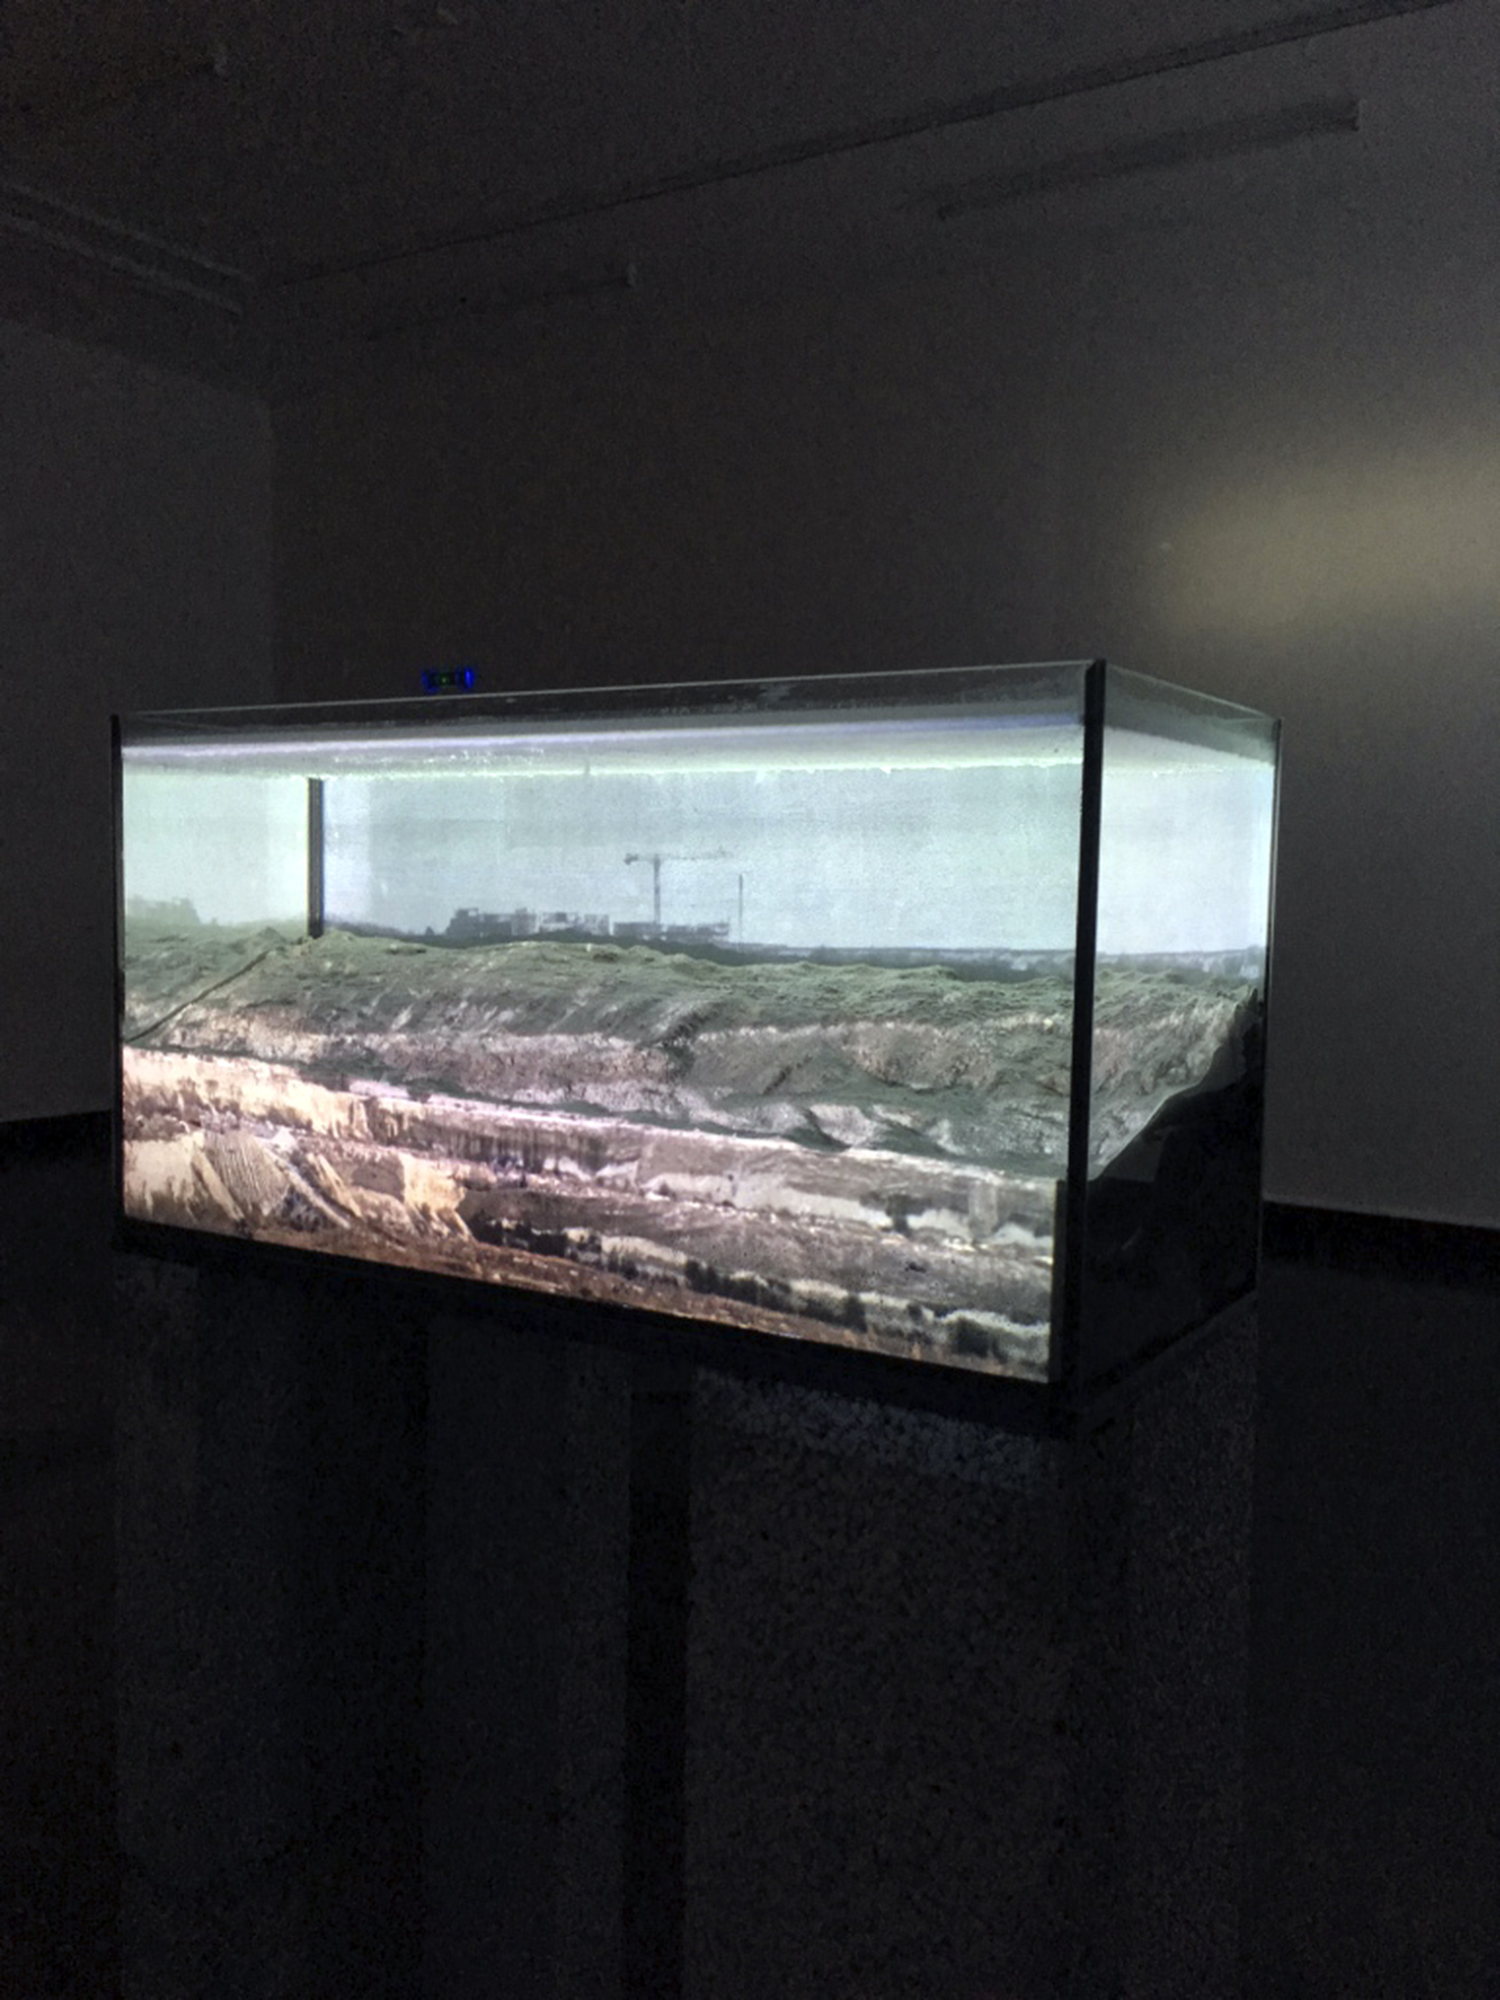  Installation view from Bergen Kunsthall, Master graduate exhibition 2017,  Triage . 